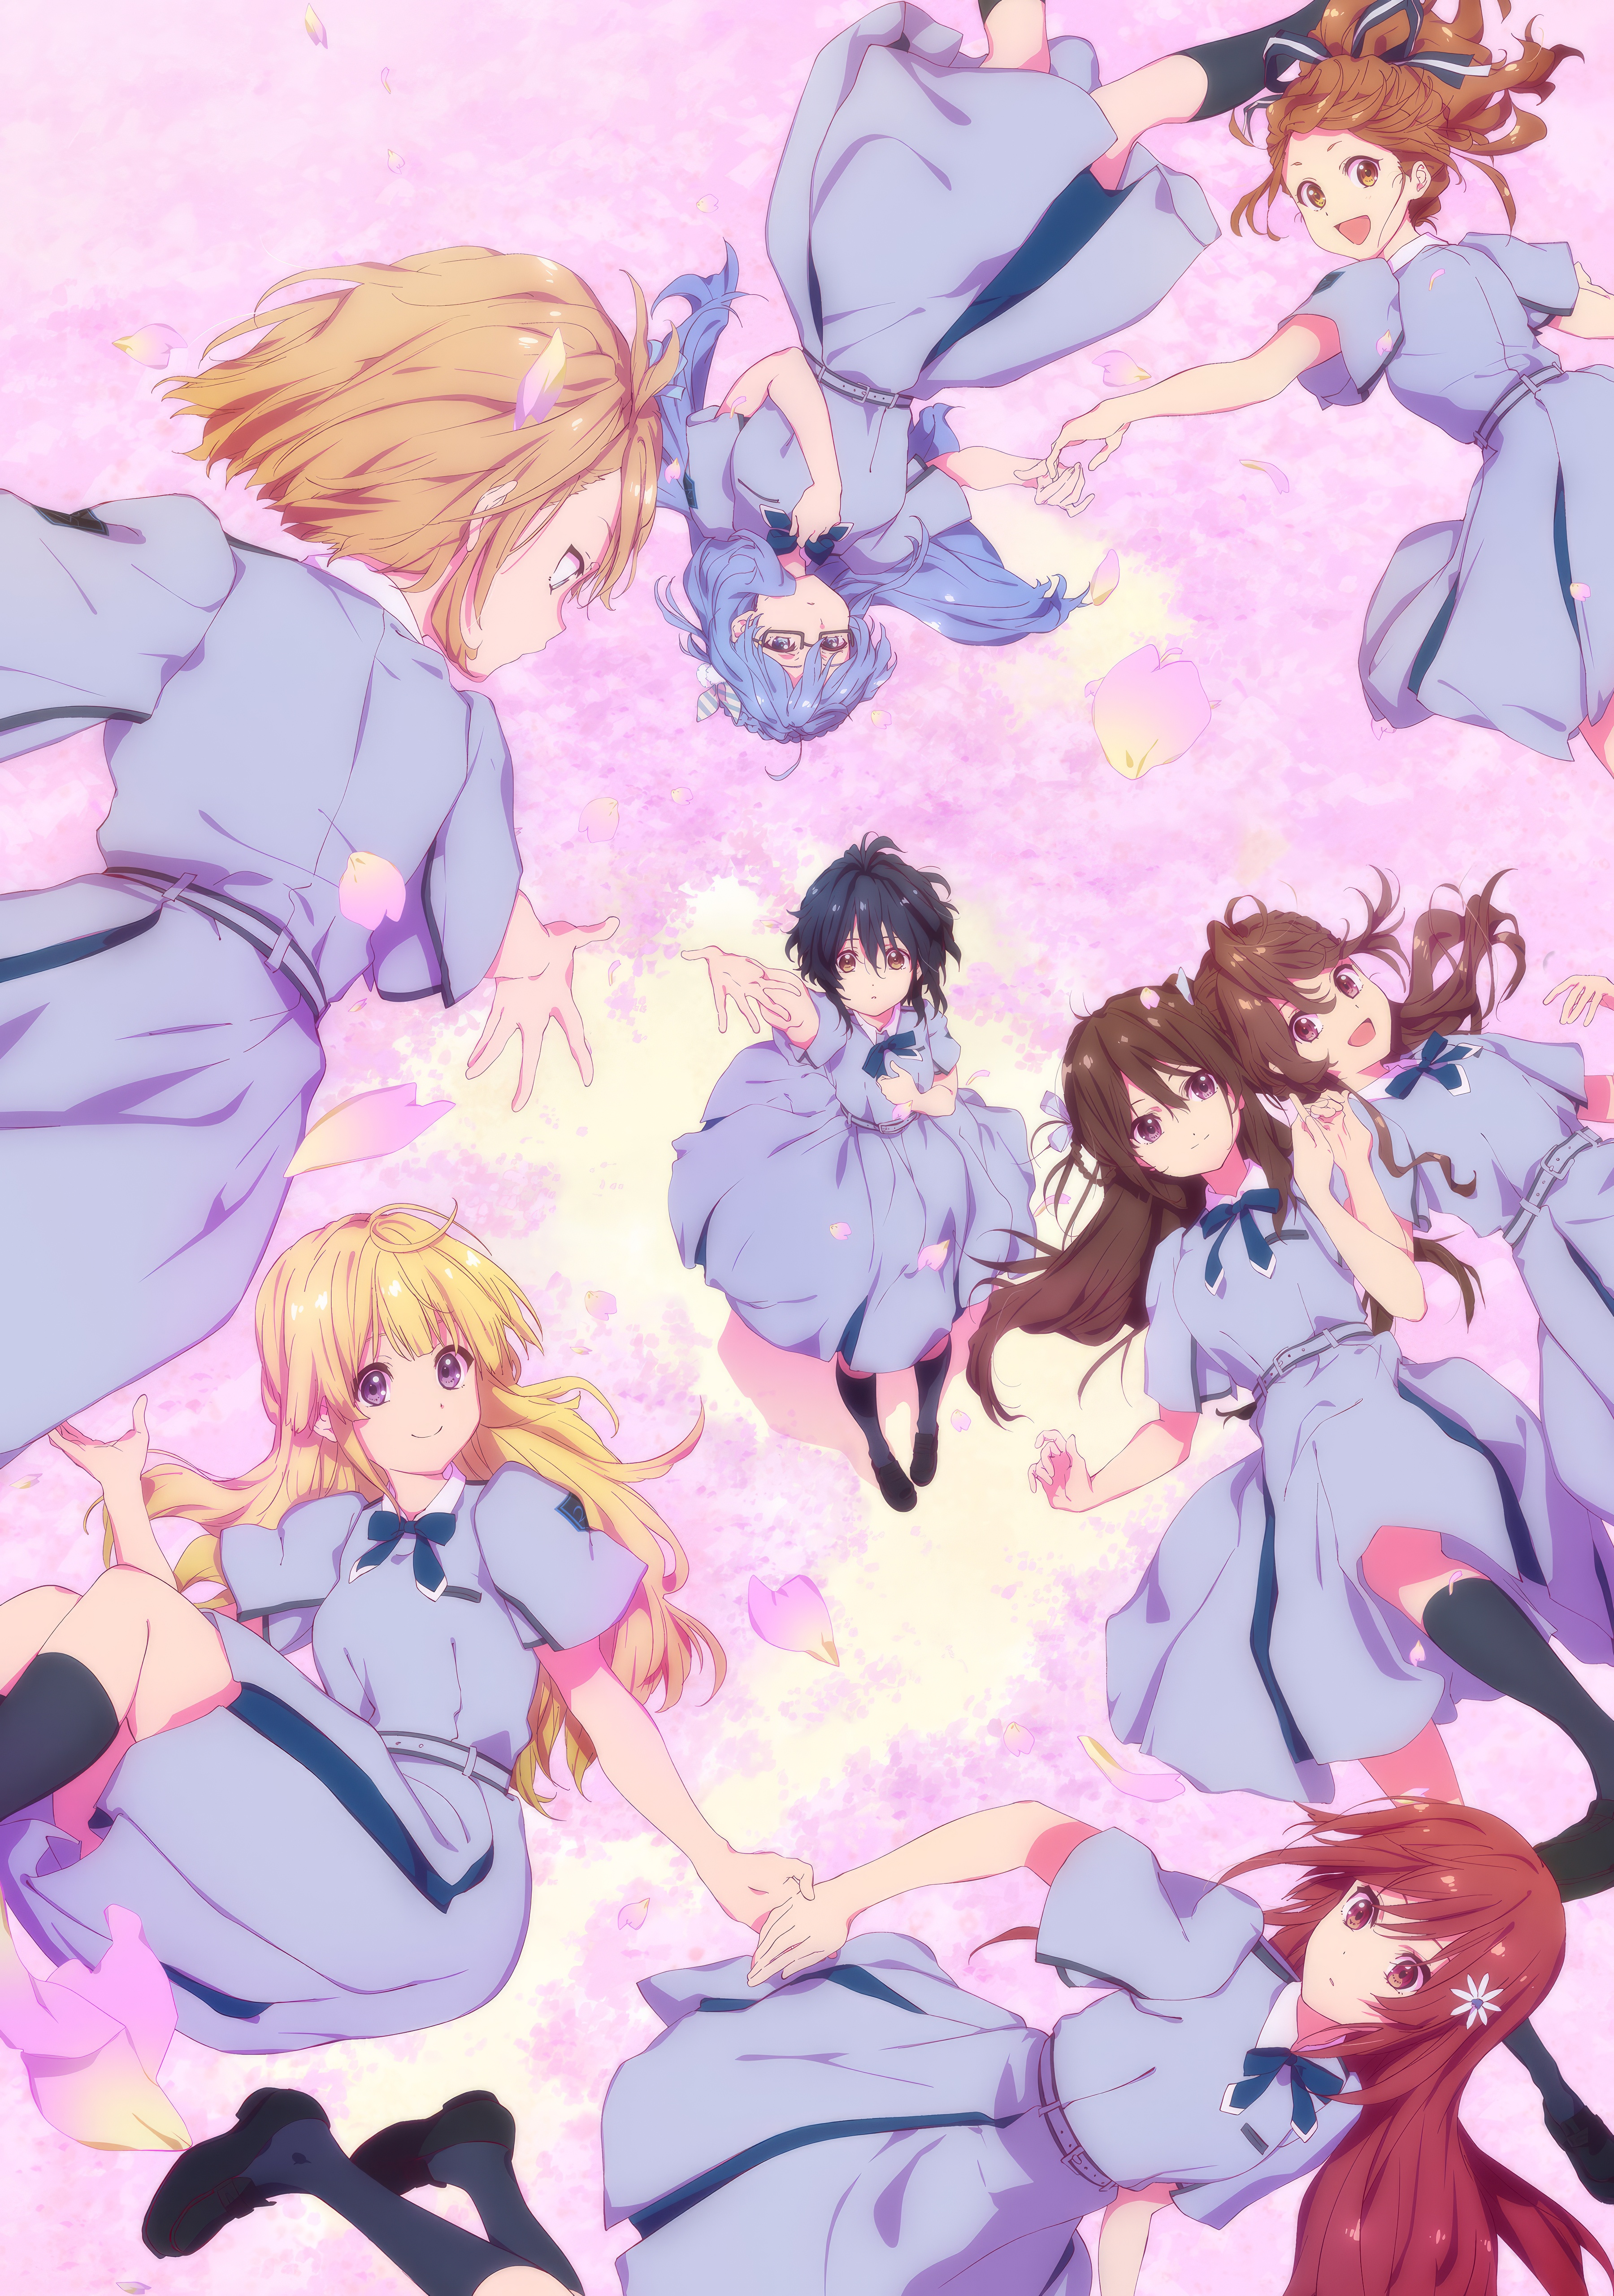 Anime 3600x5120 22/7 anime girls dress portrait display schoolgirl school uniform petals smiling glasses long hair arms reaching bow tie